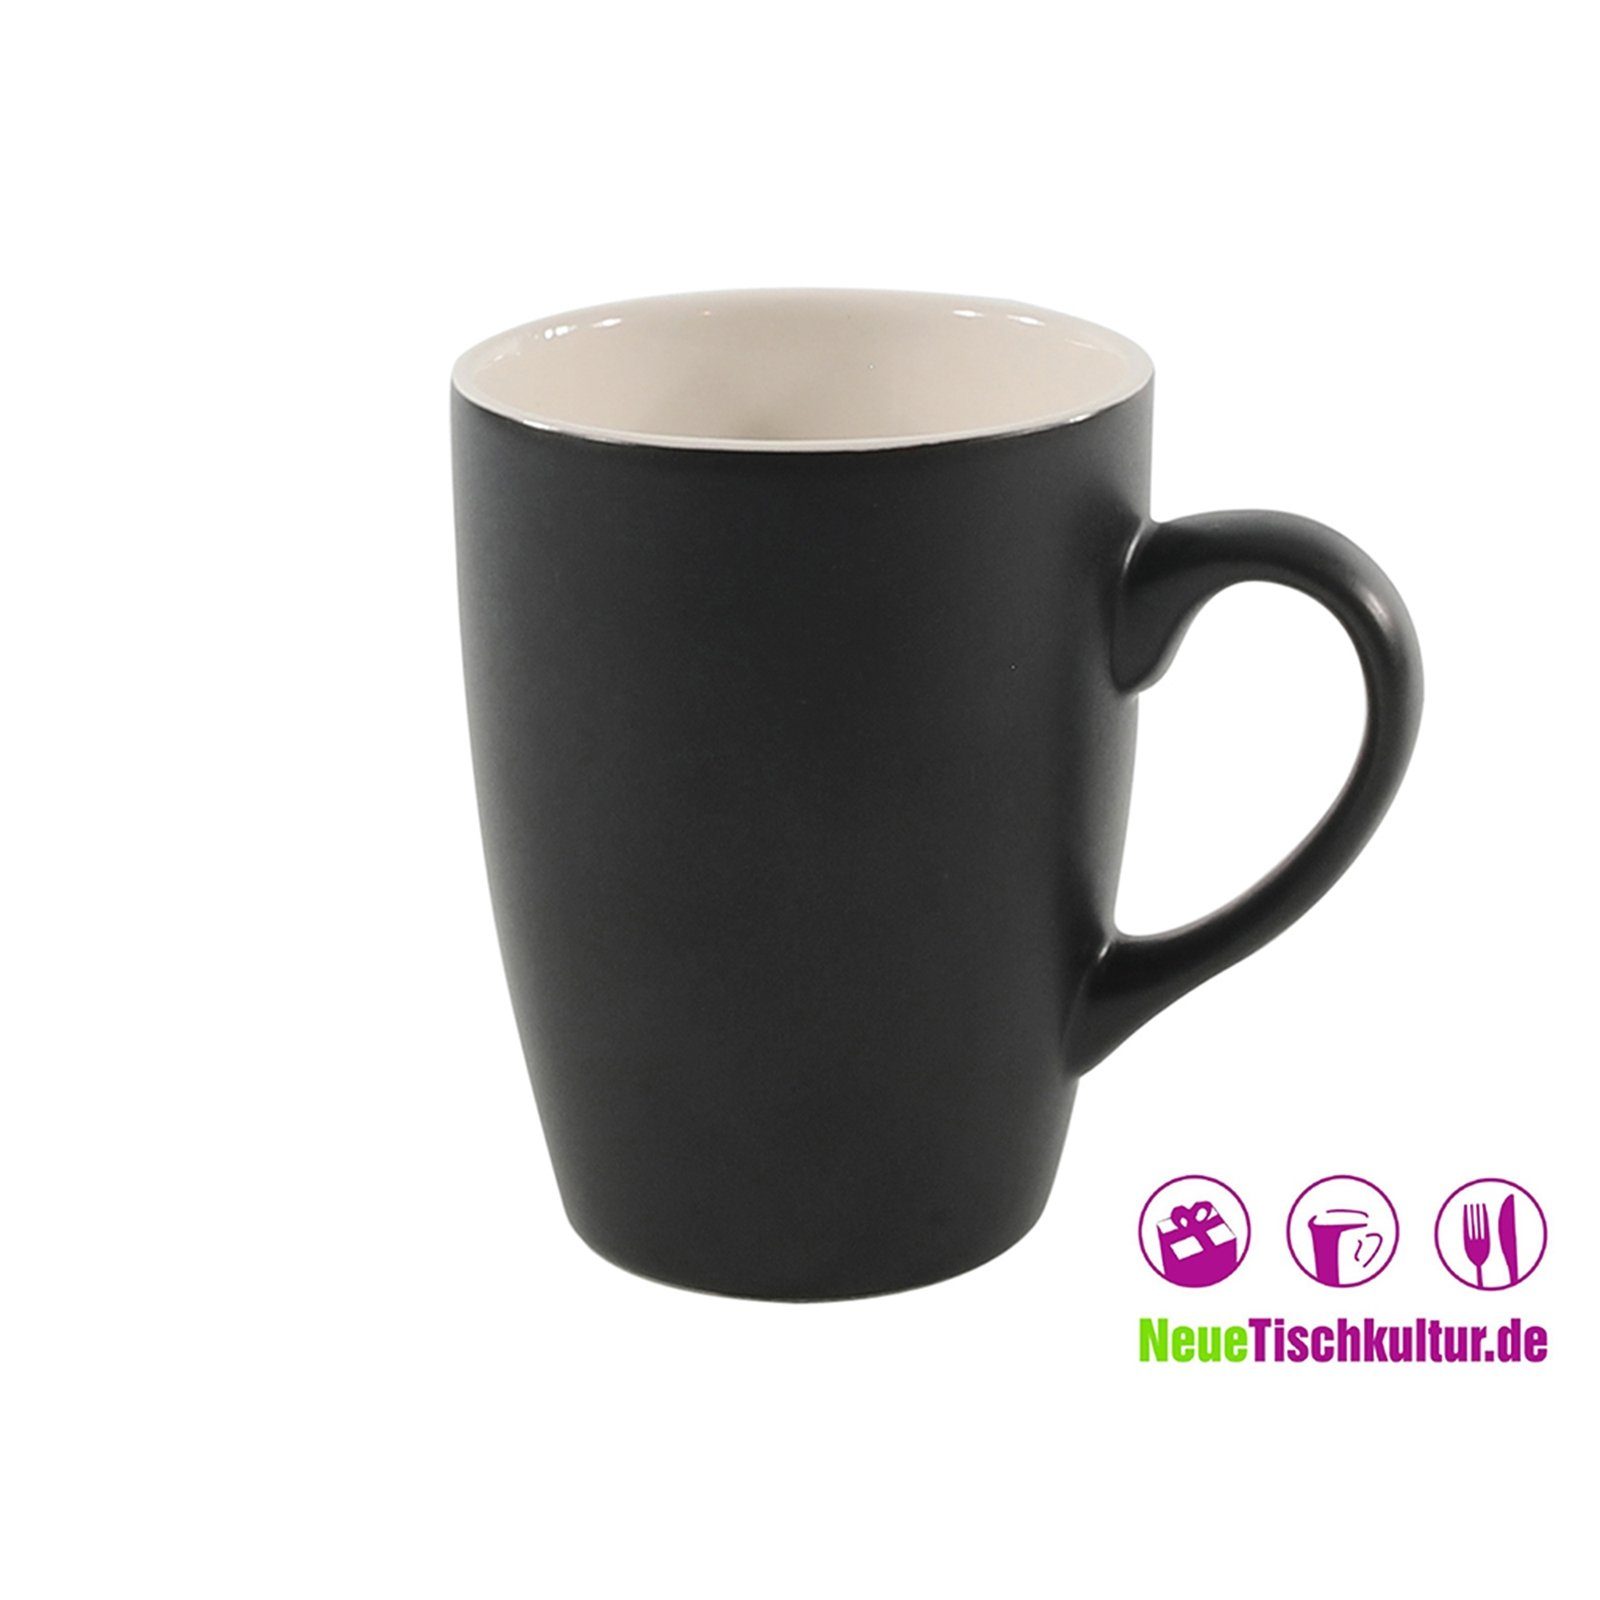 Black Kaffeetasse Matt, Tasse Set Keramik, Neuetischkultur 4er Tasse Teetasse